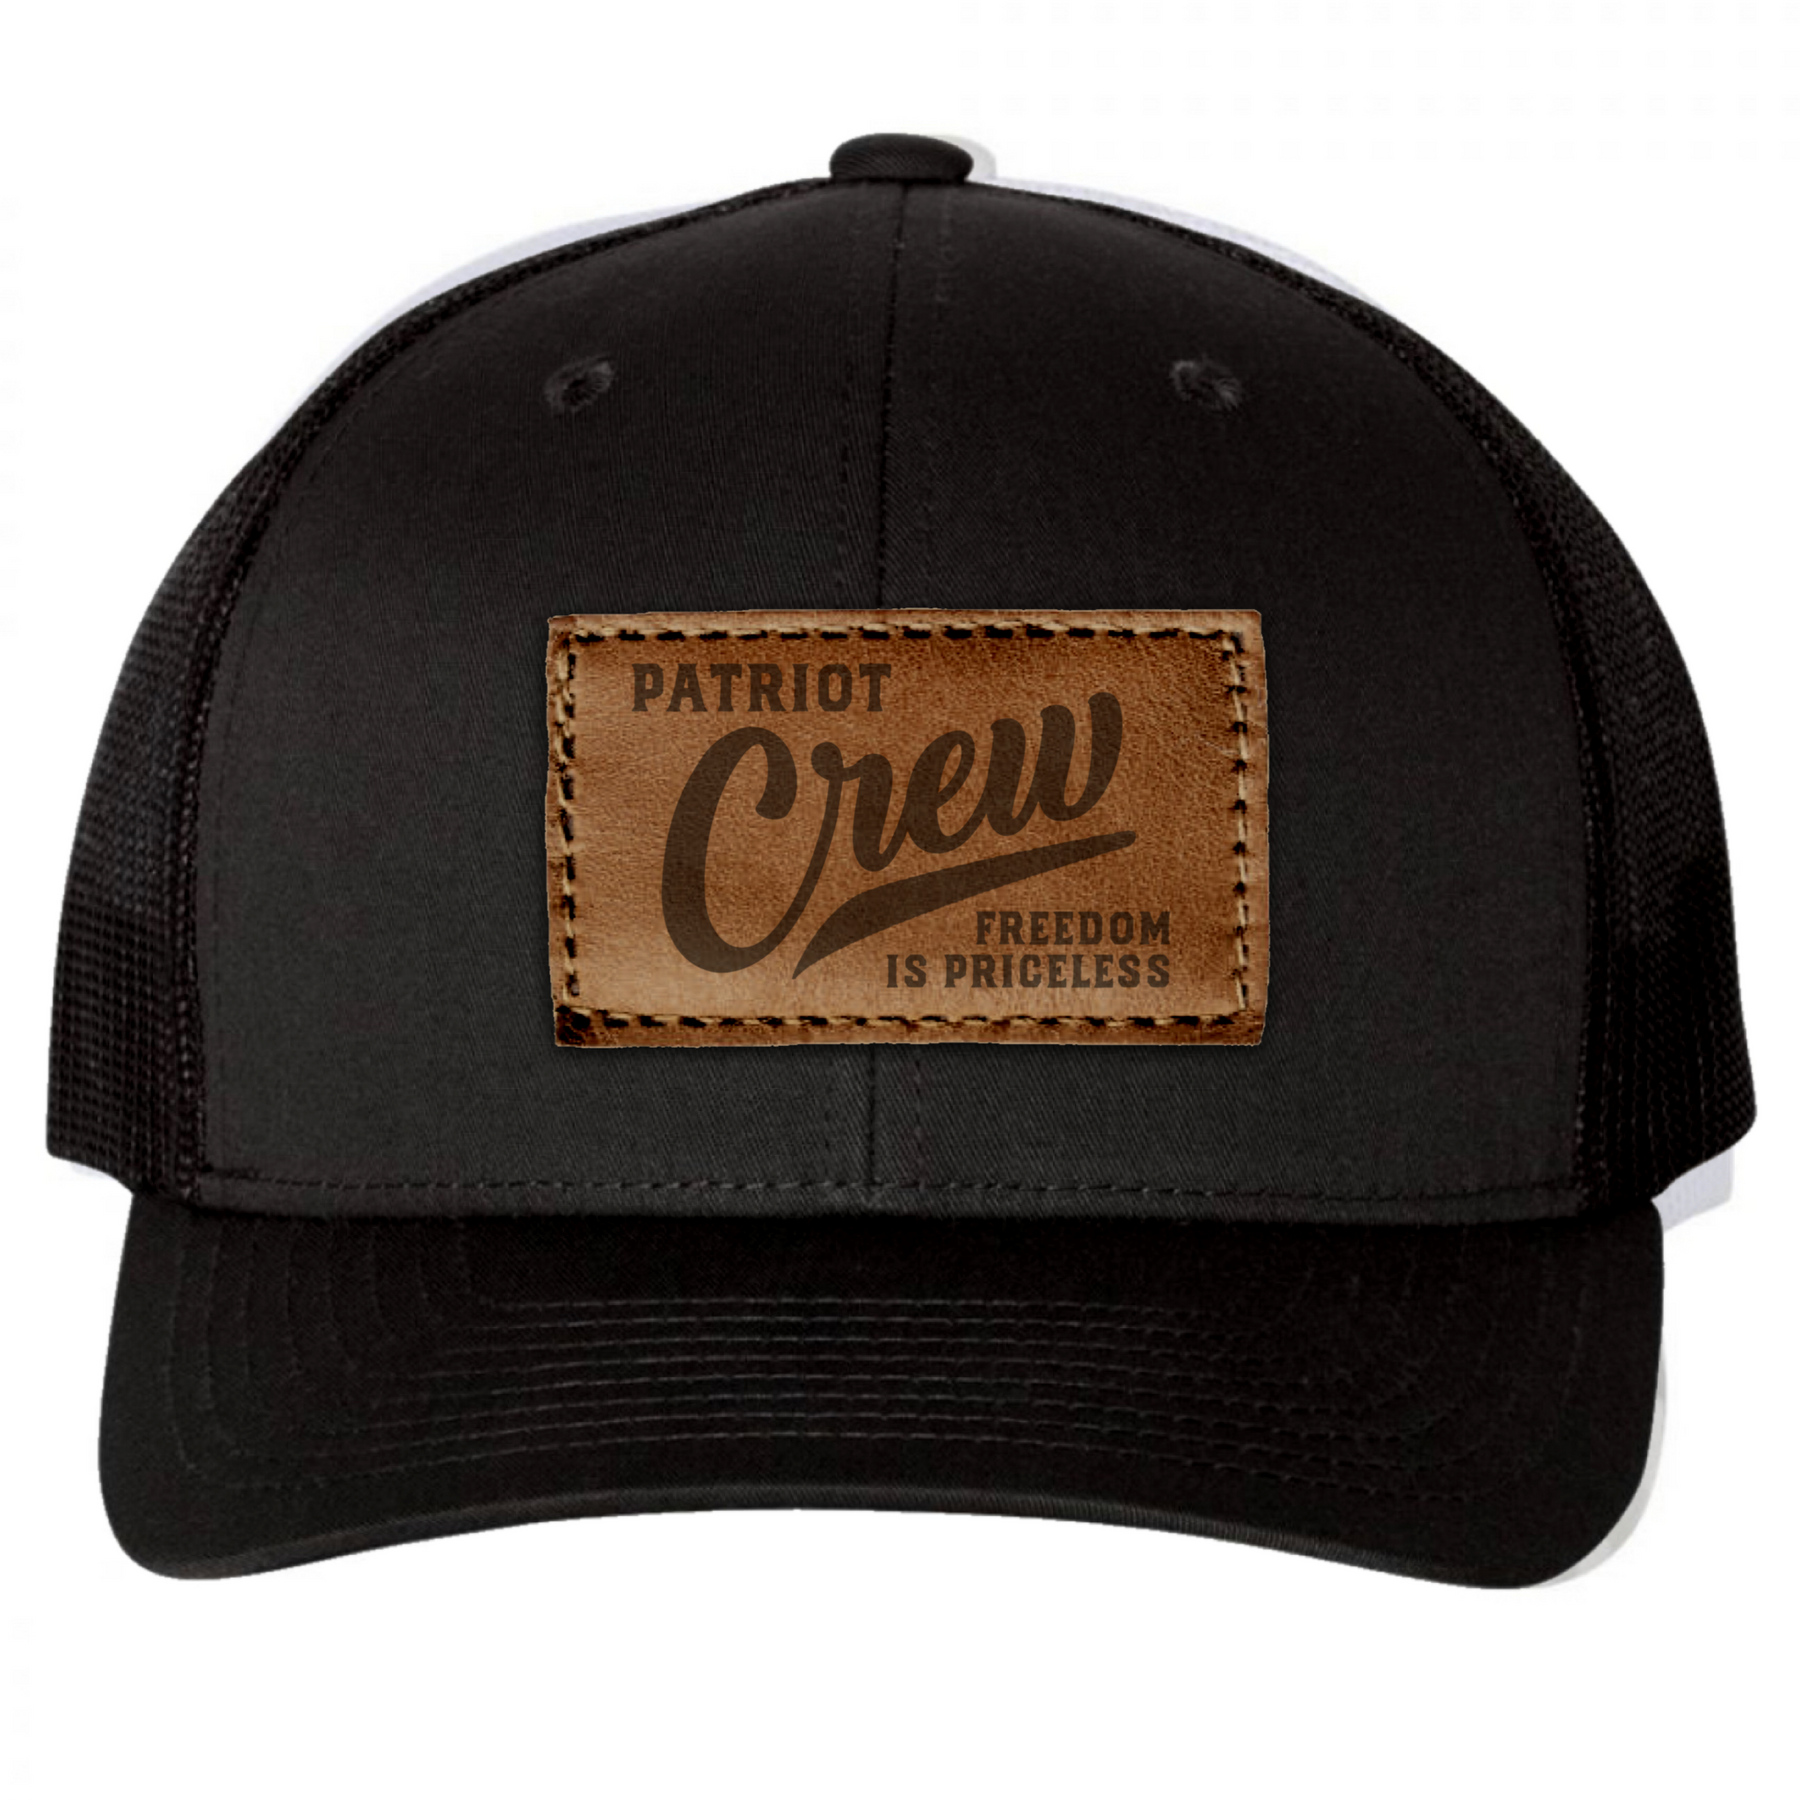 Patriot Crew Retro Leather Patch Trucker Hat